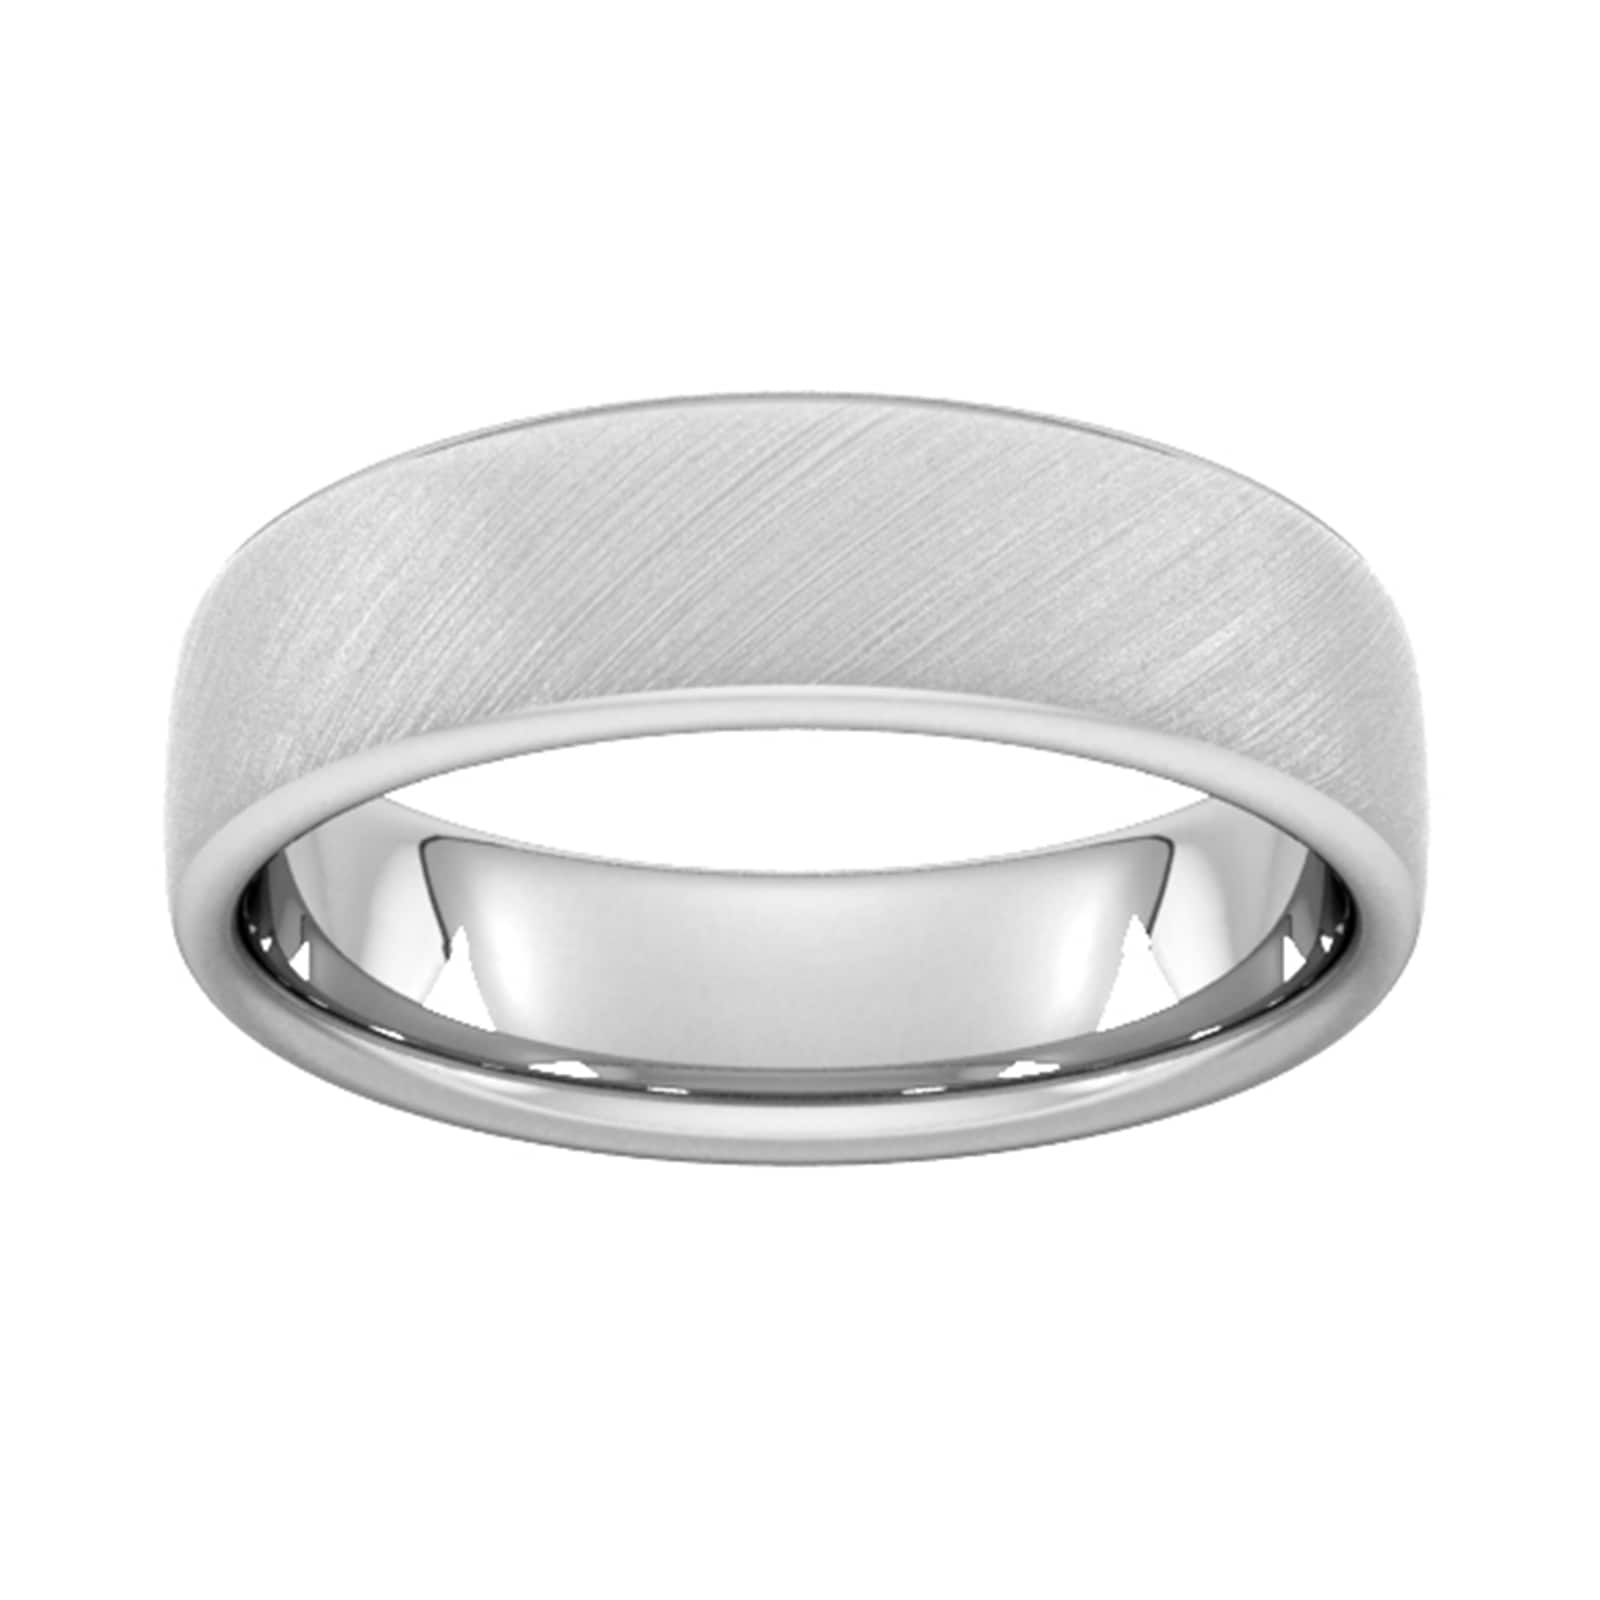 6mm Slight Court Standard Diagonal Matt Finish Wedding Ring In 9 Carat White Gold - Ring Size P